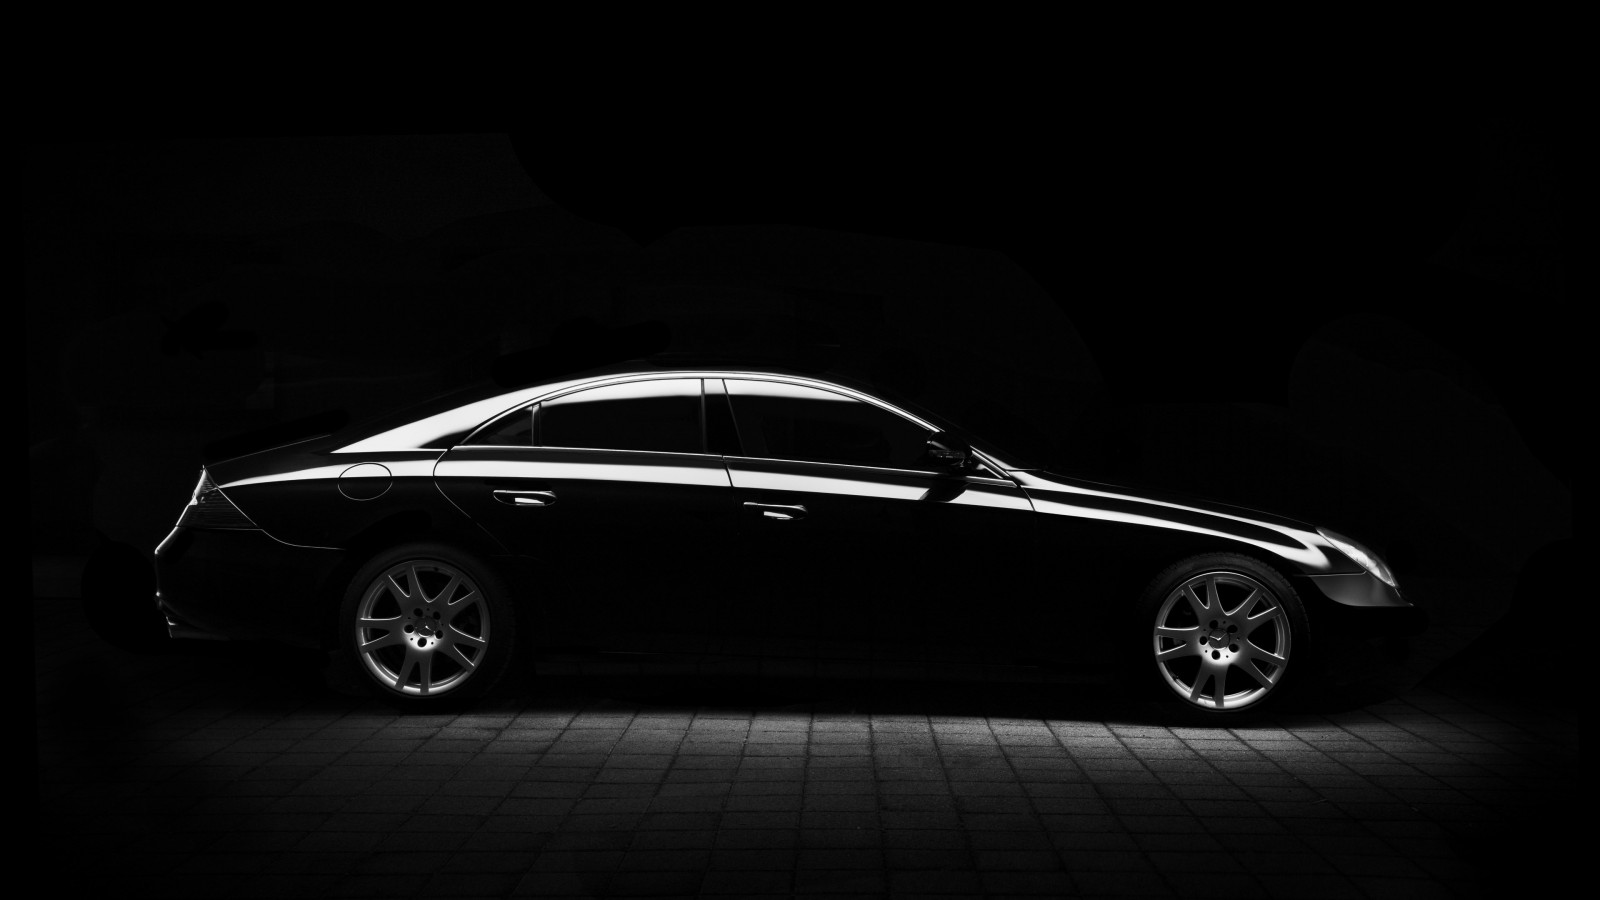 Silhouette of a Mercedes car wallpaper 1600x900